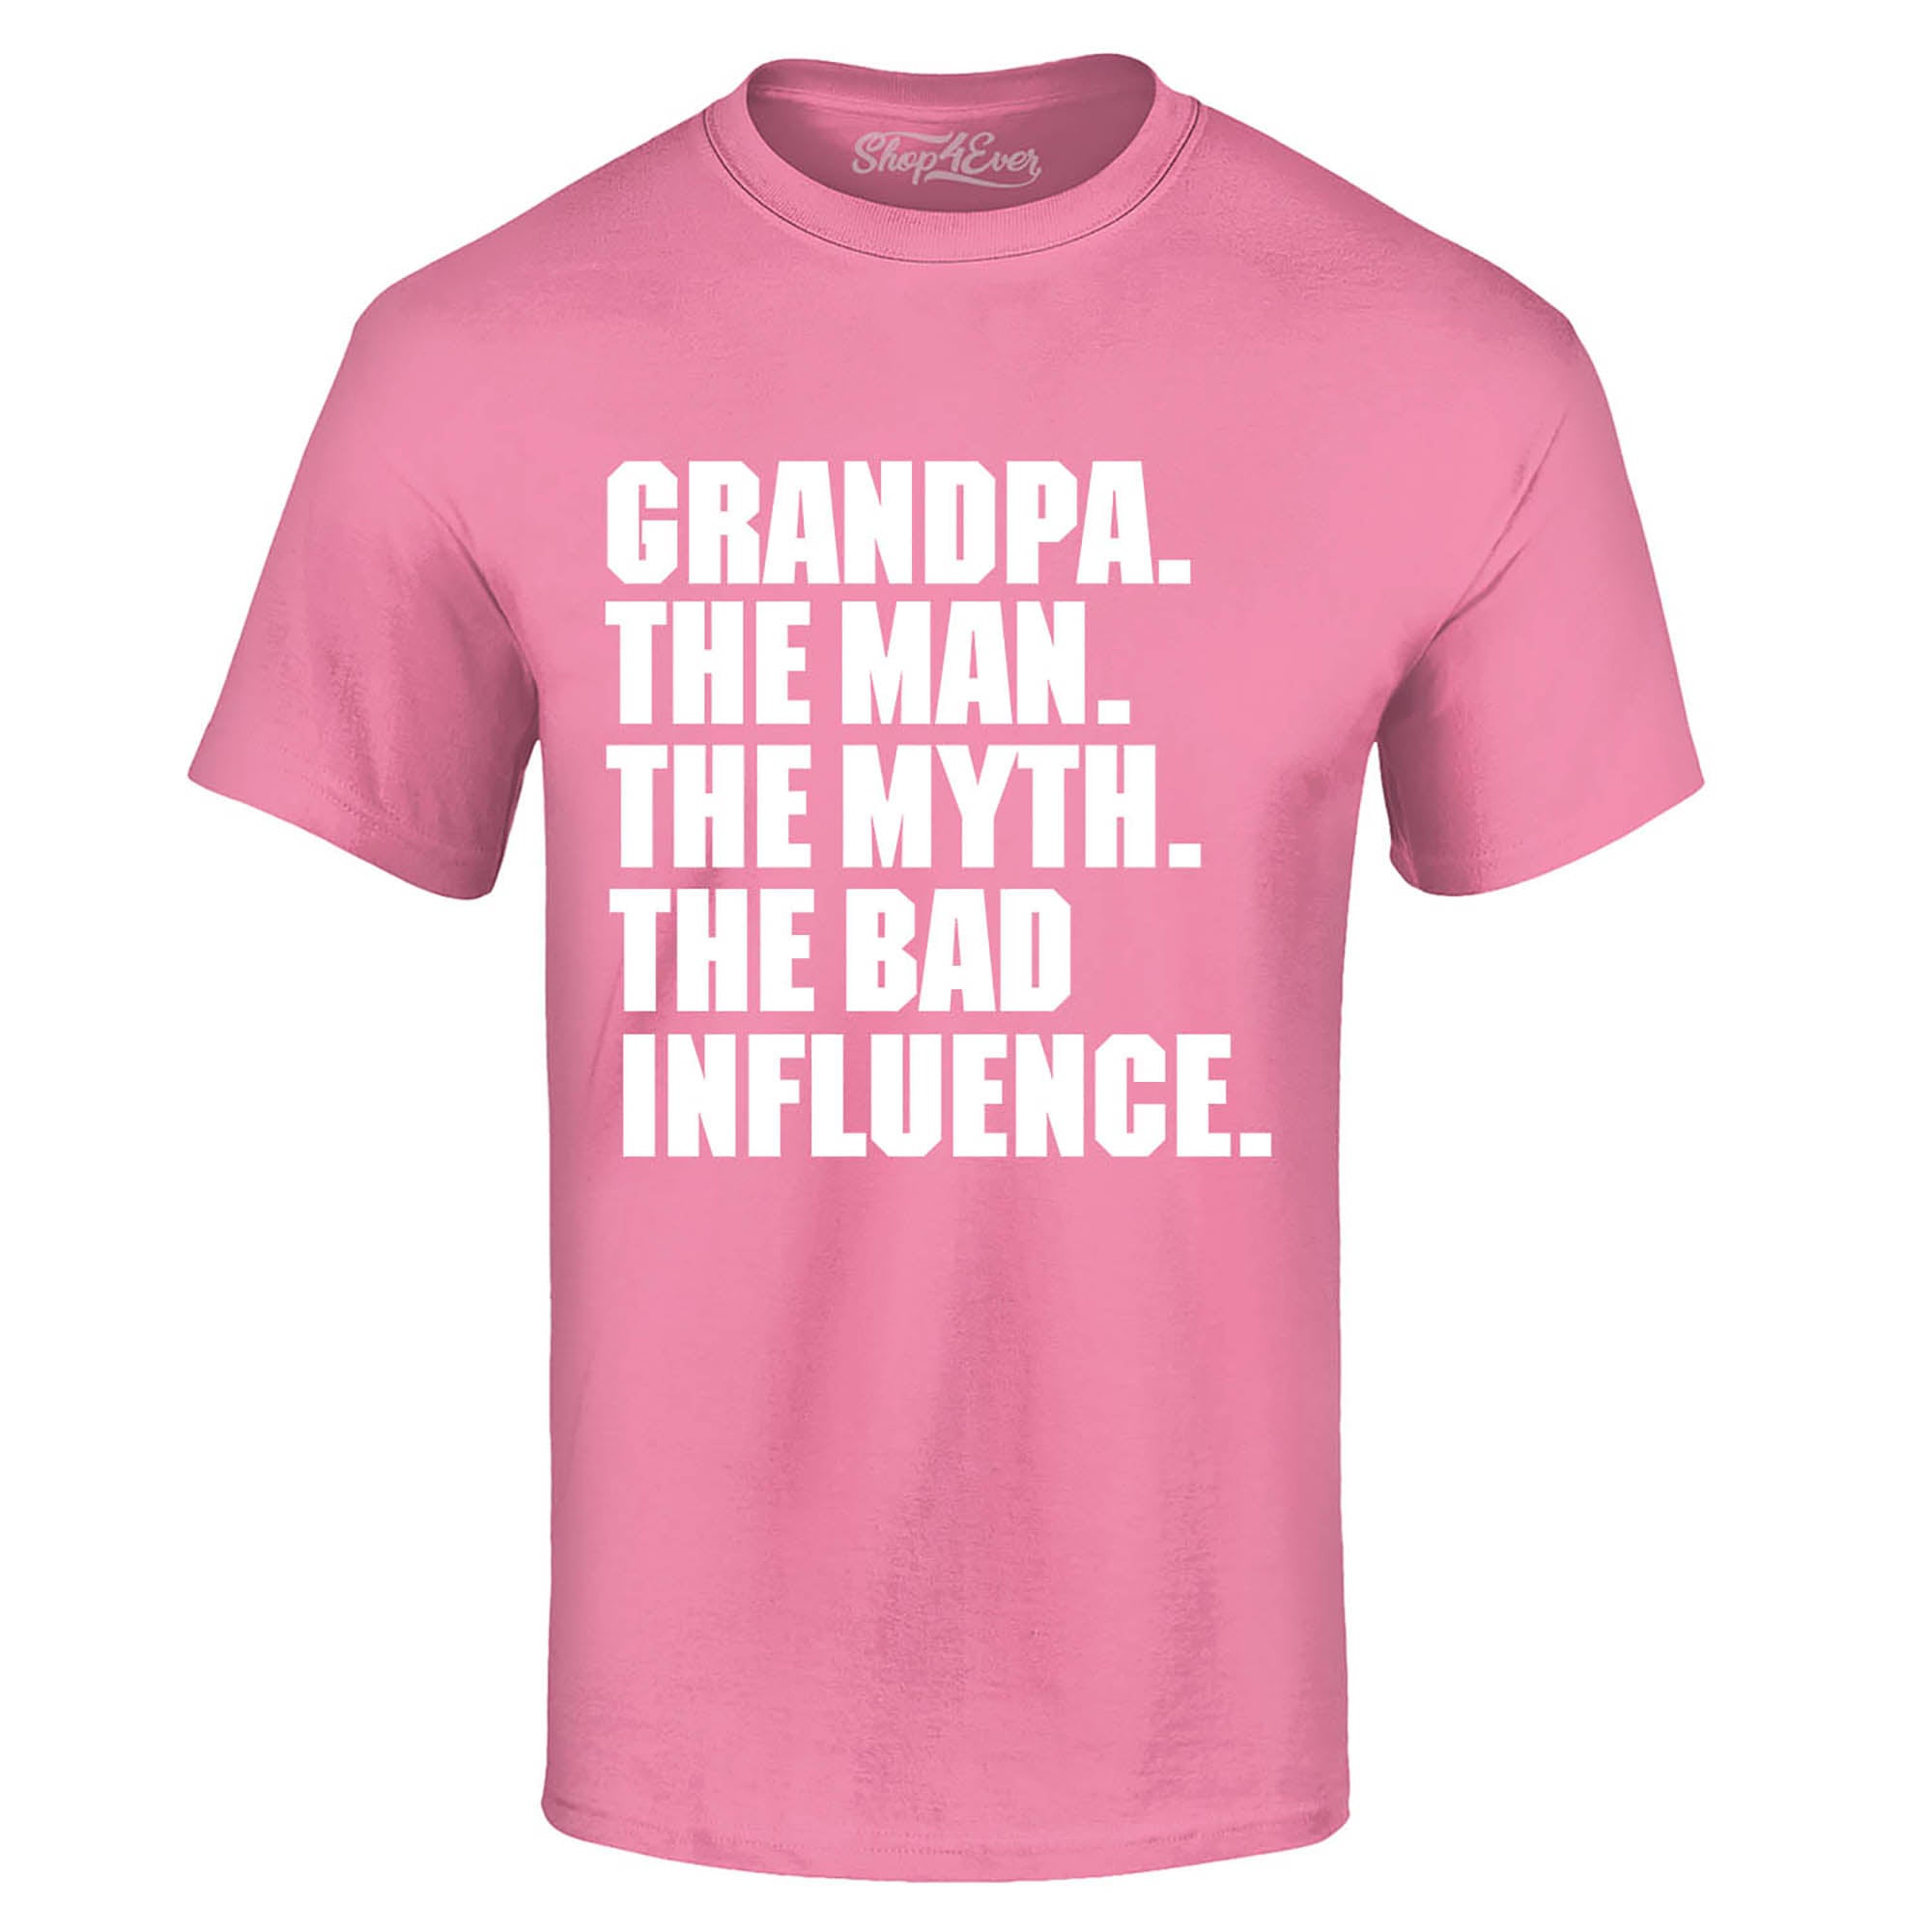 Grandpa The Man The Myth The Bad Influence T-Shirt